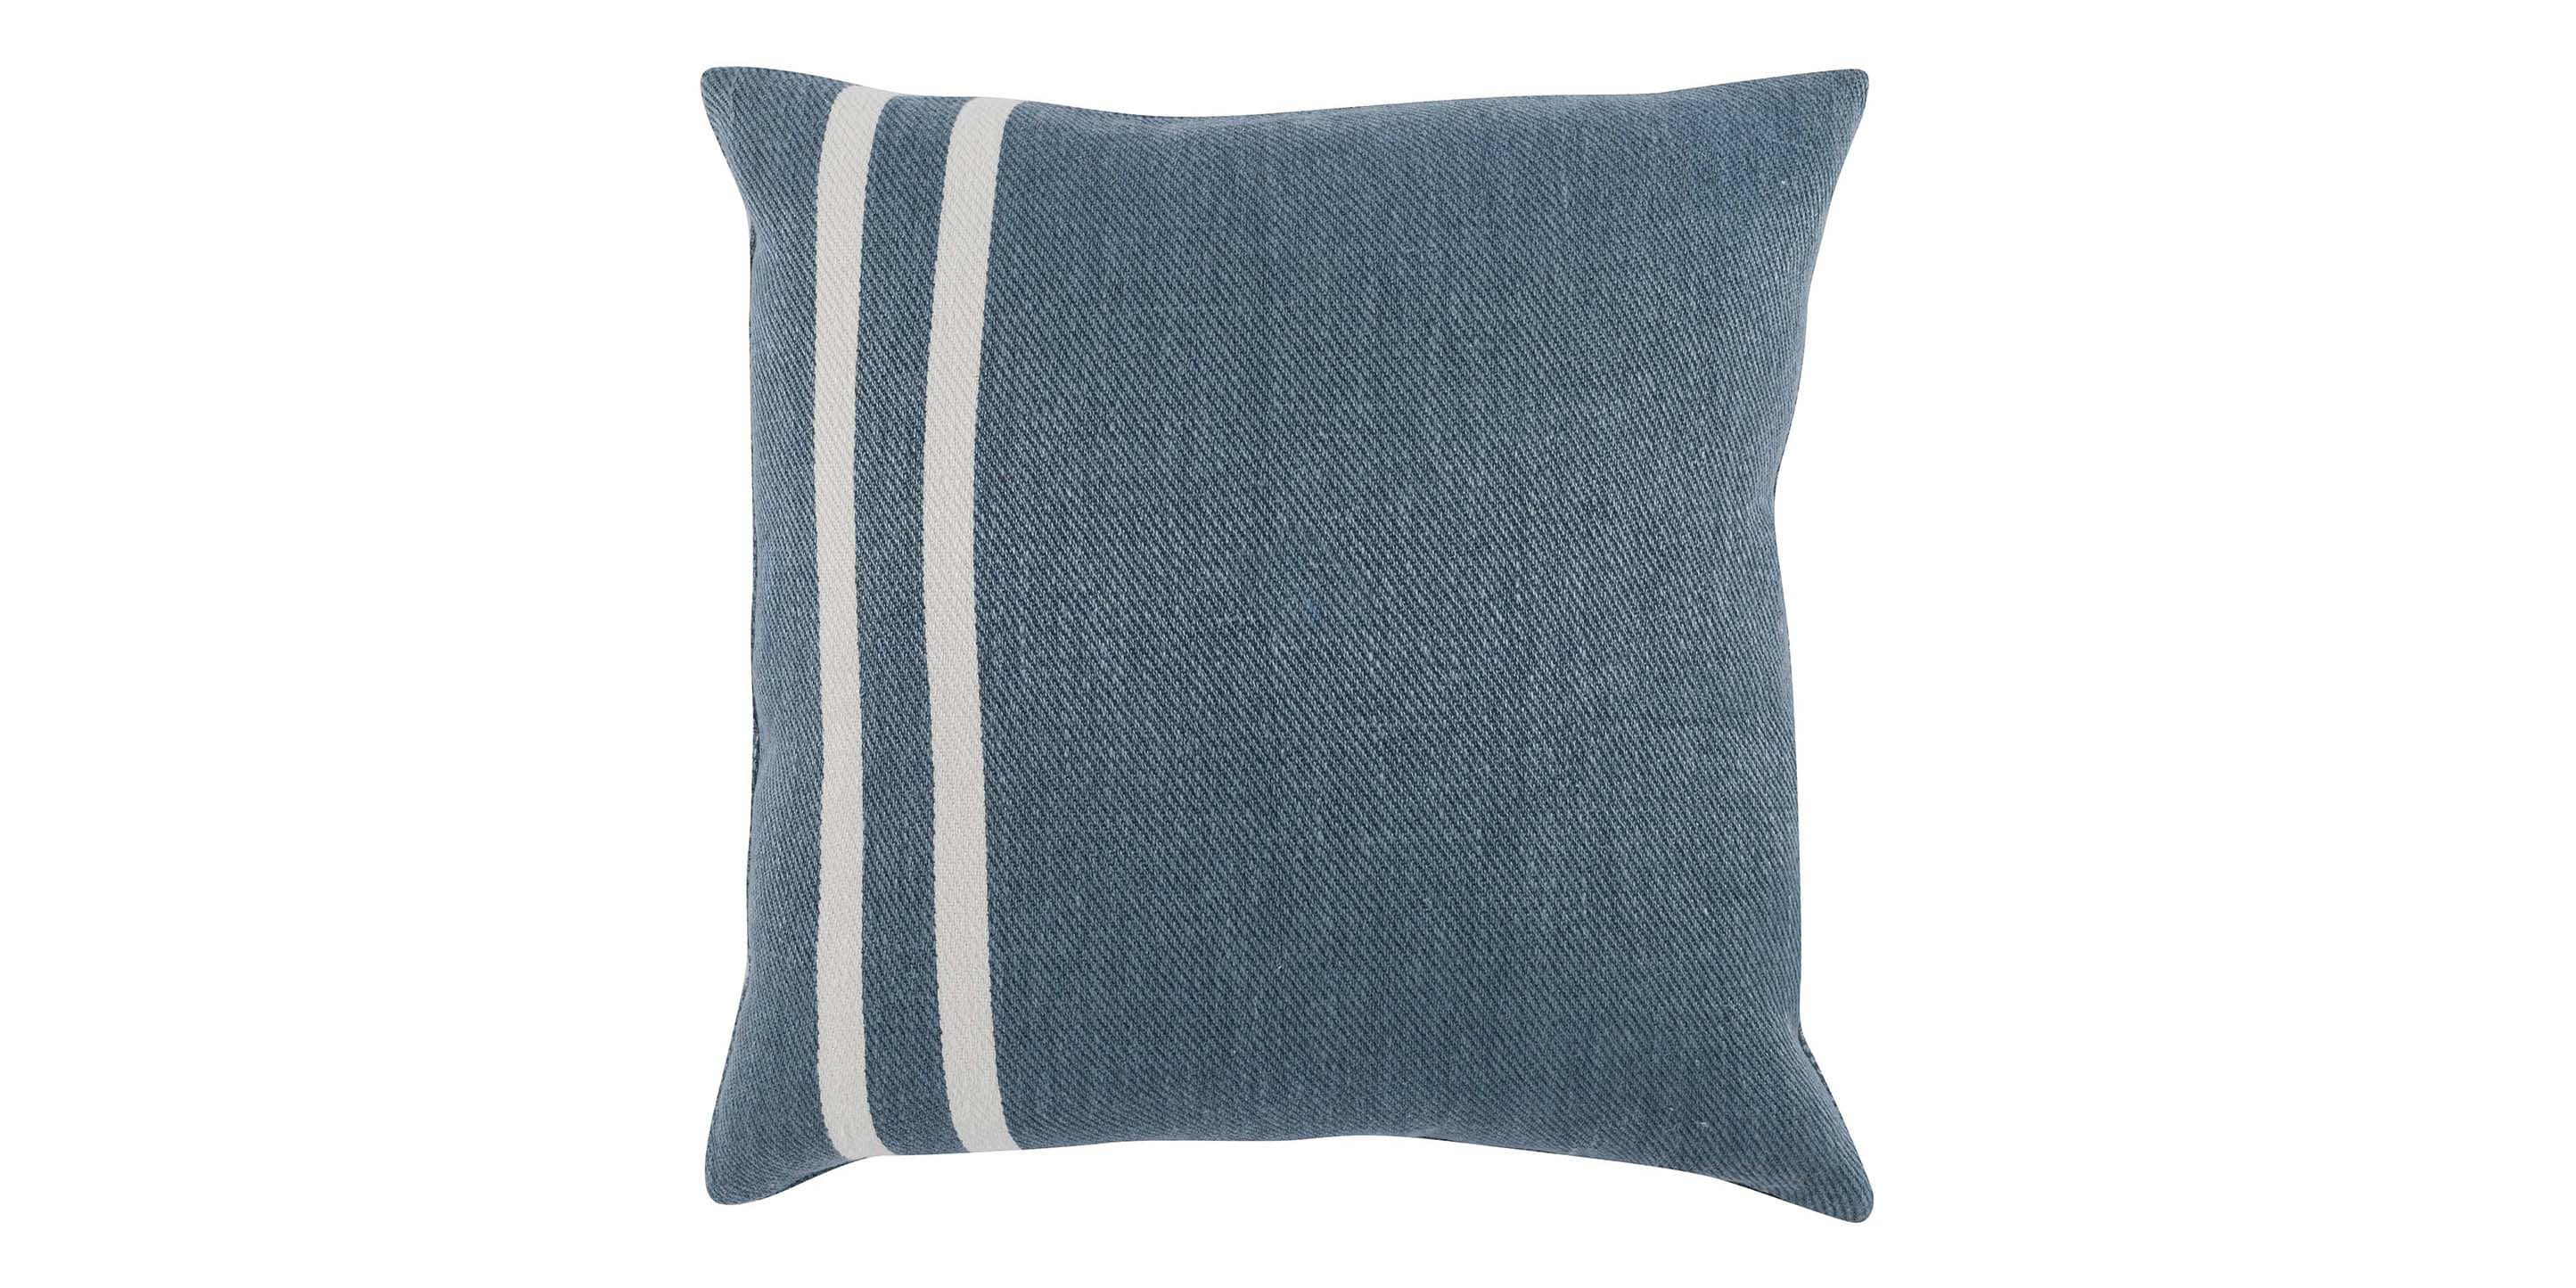 Lakeshore Blue Pillow Cover + Insert